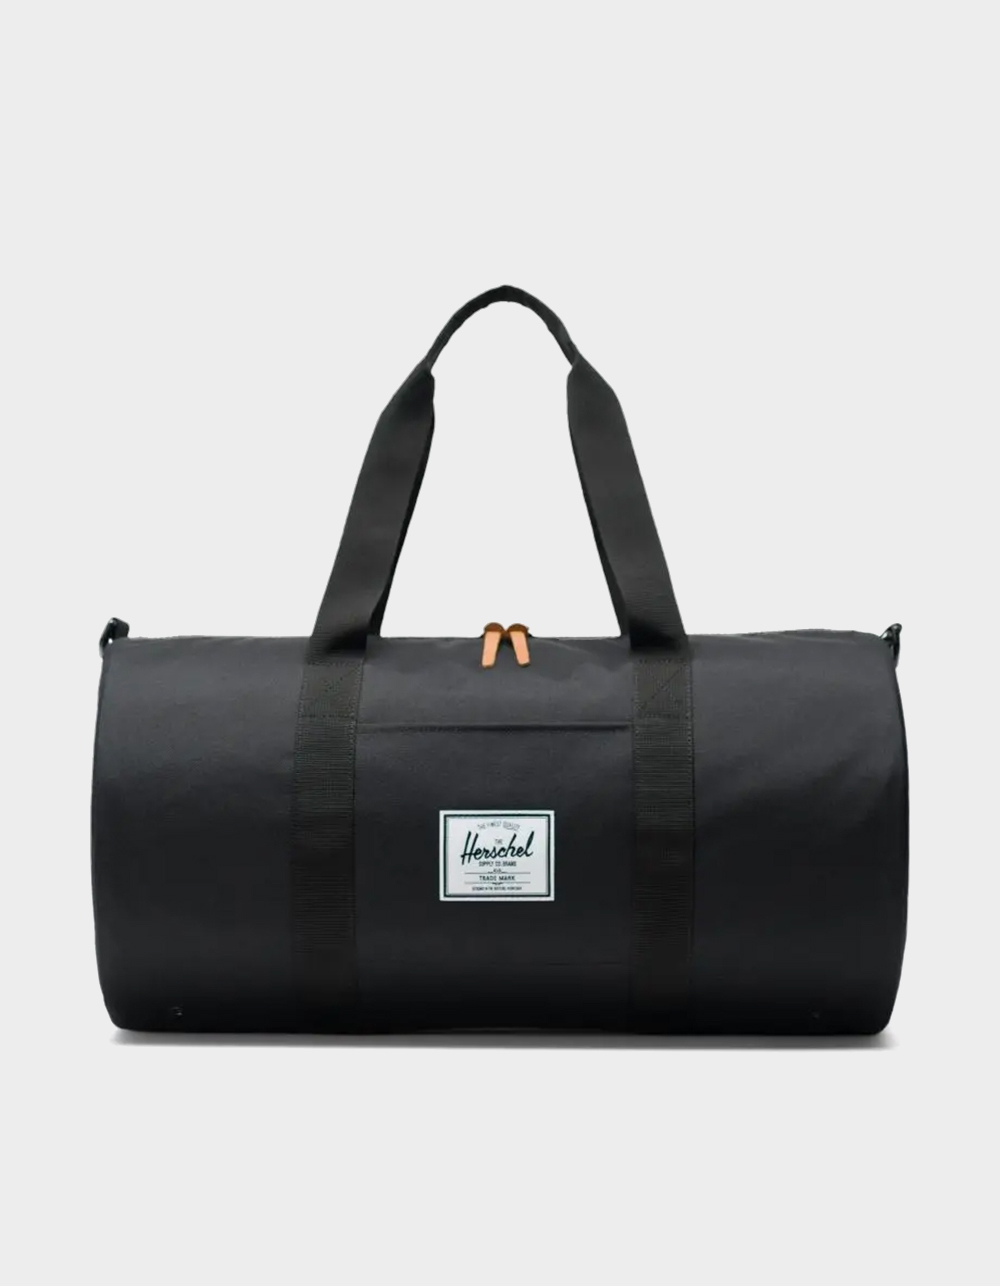 Steve Madden Duffel Weekender Bag in Black for Men